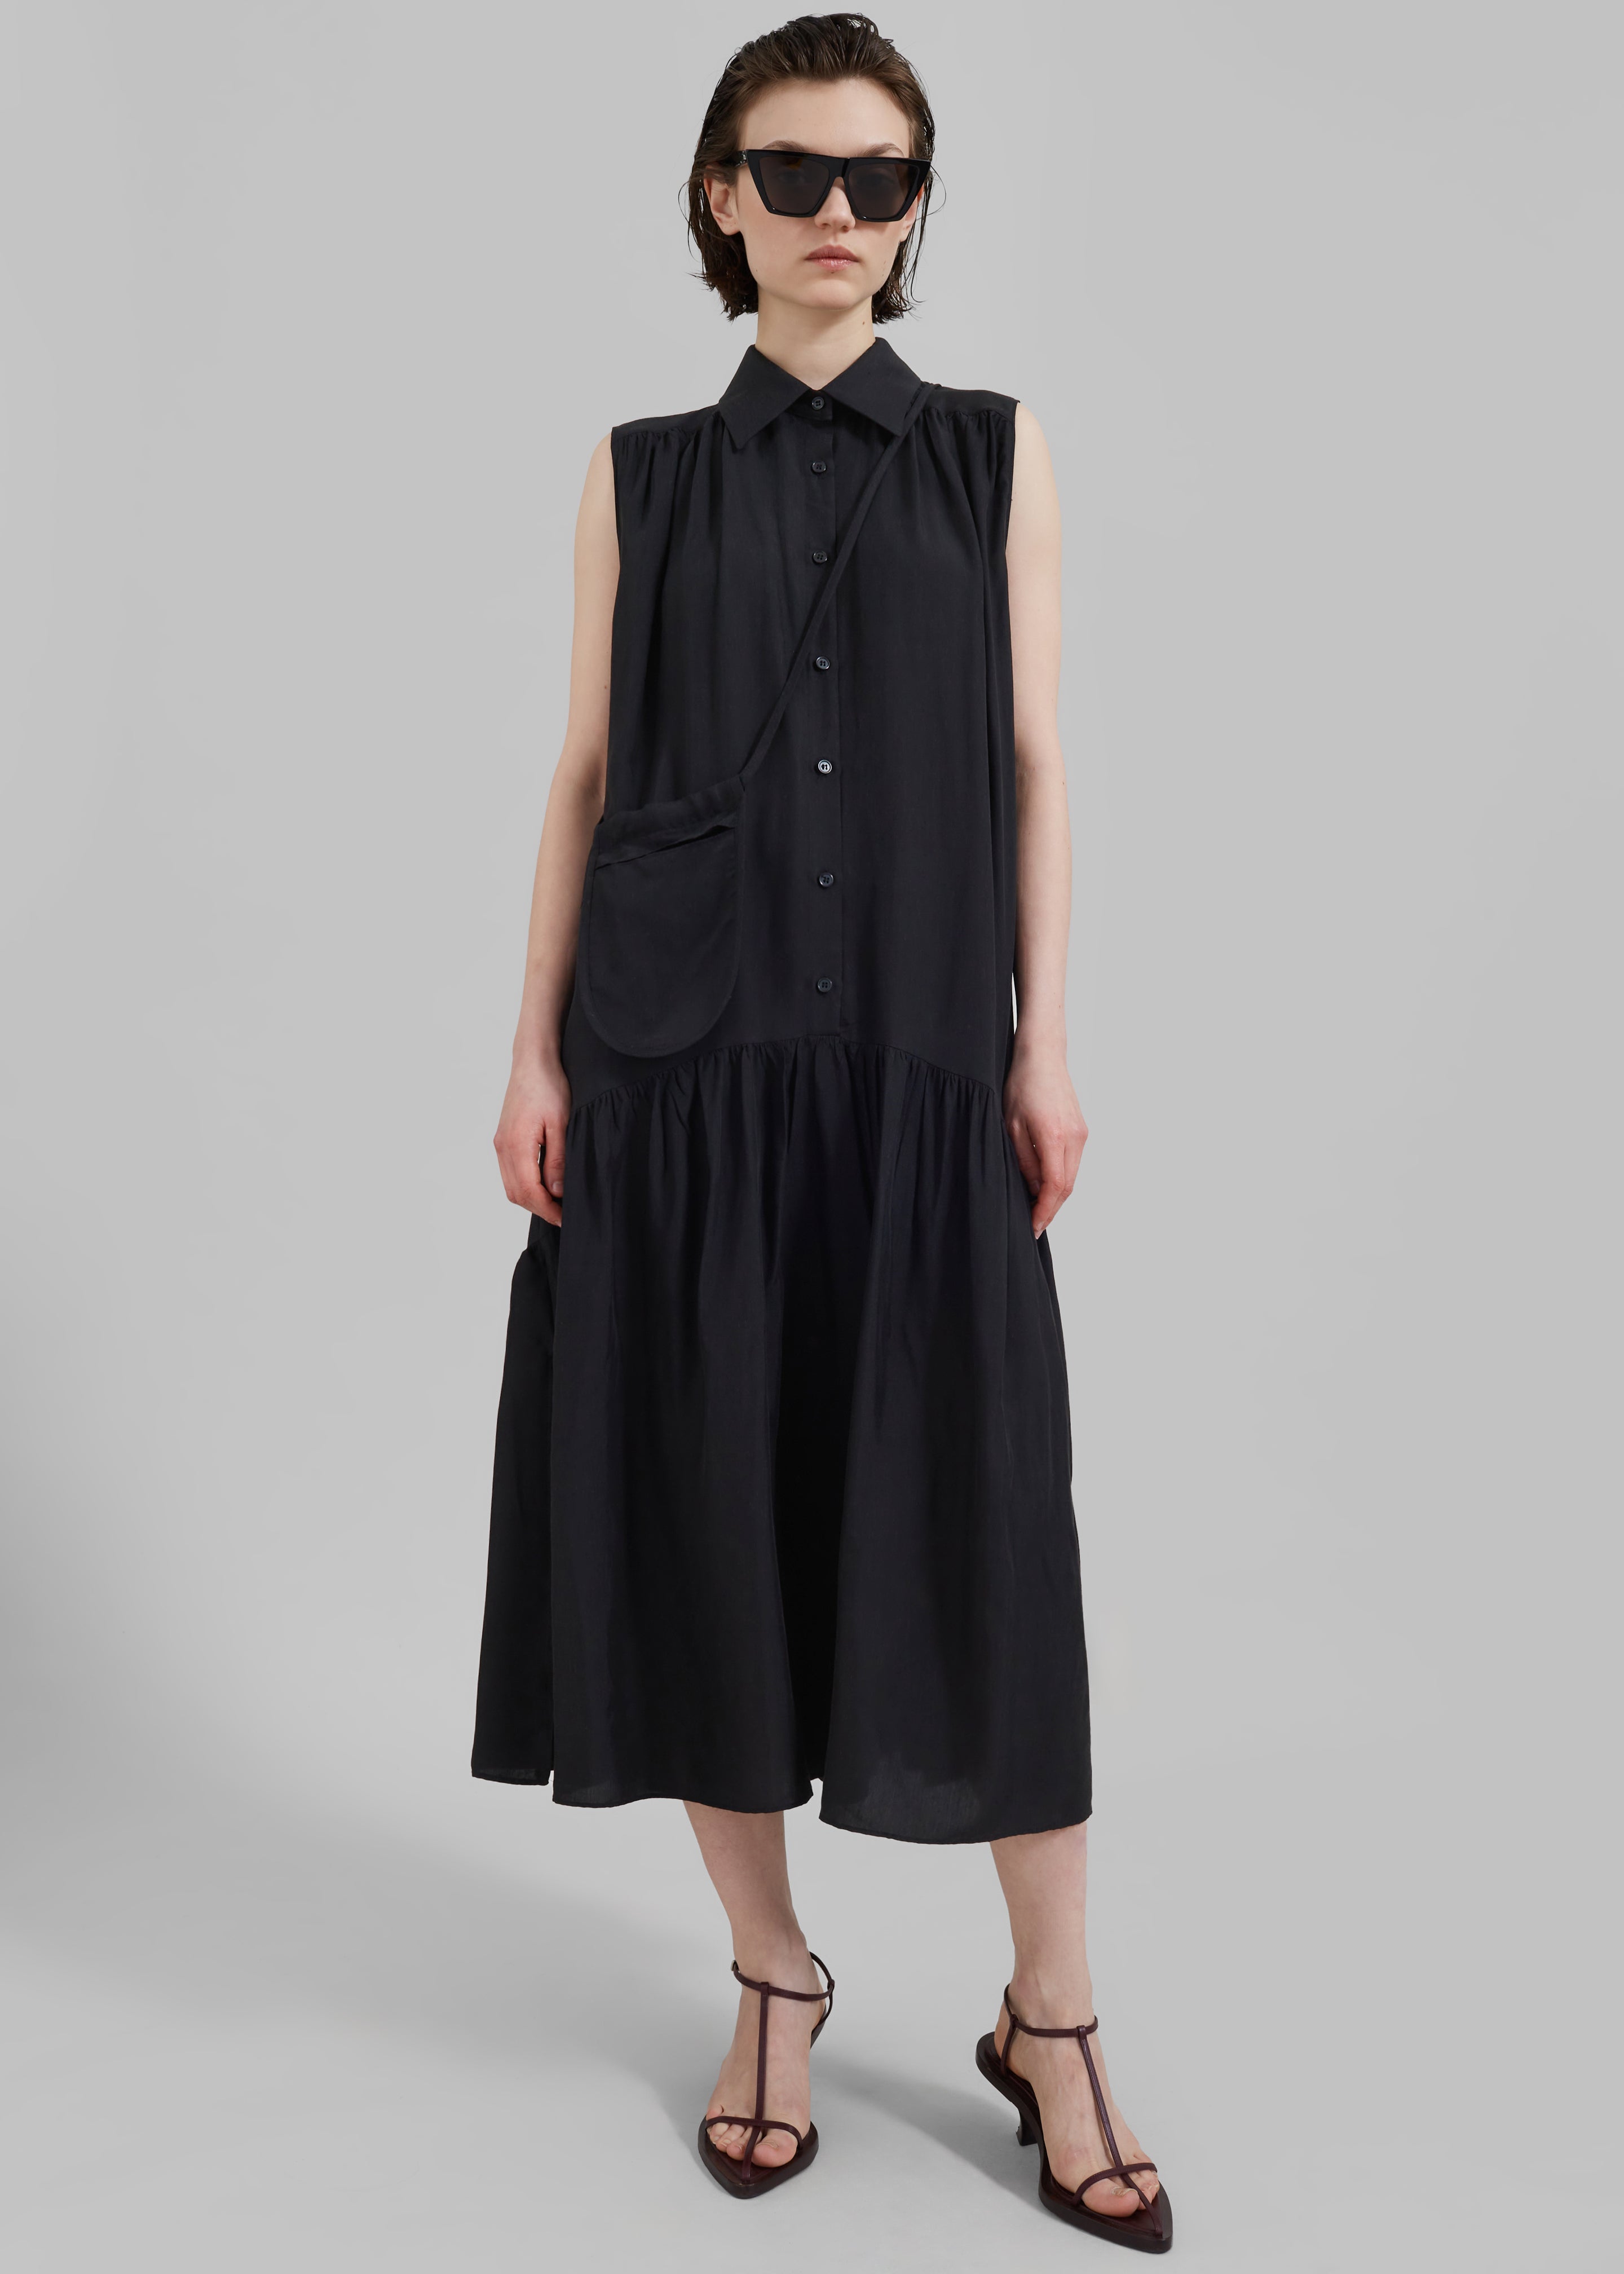 Maela Button Up Midi Dress - Black - 4